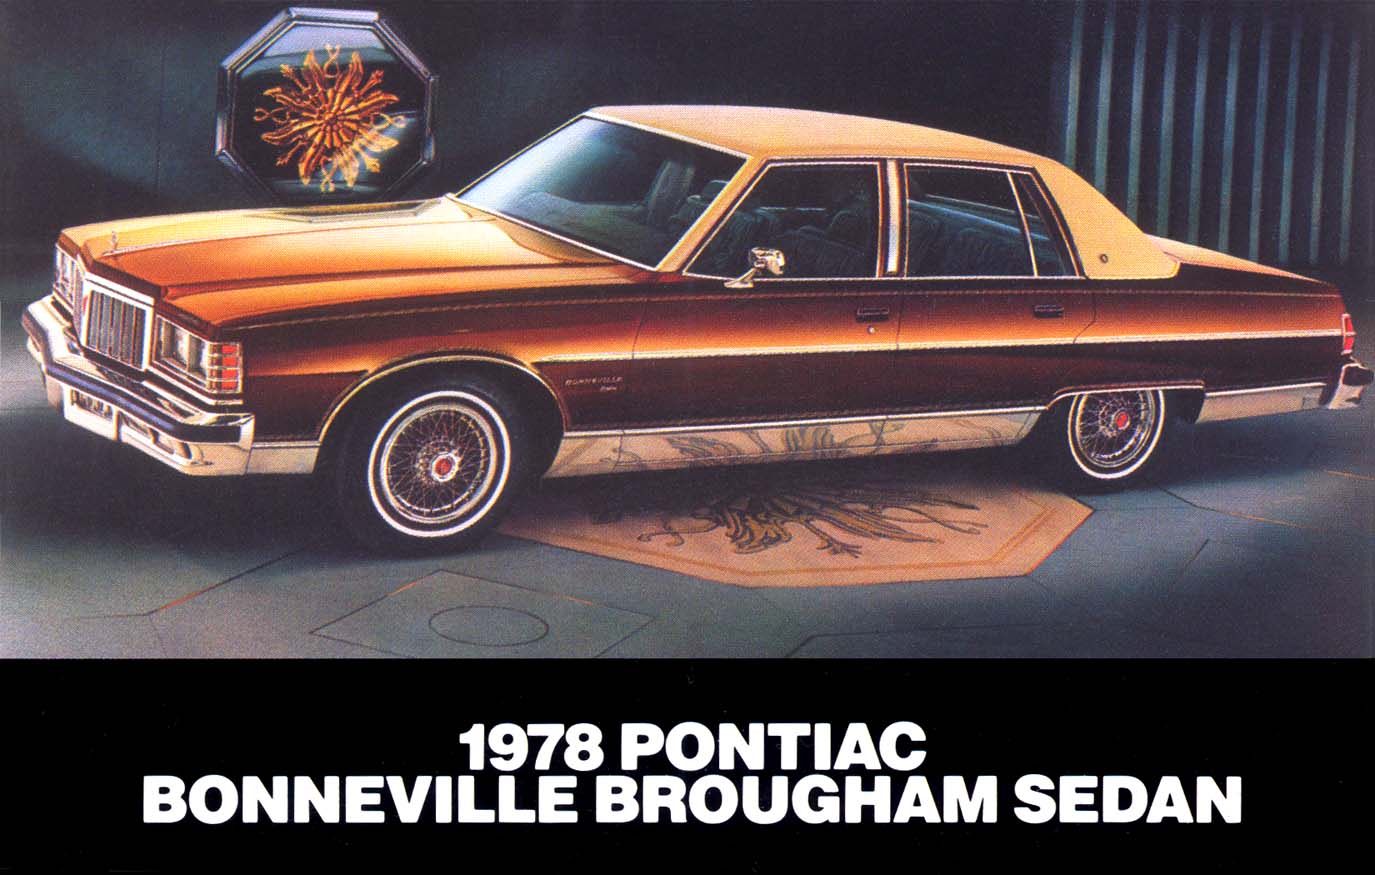 1978_Pontiac_Postcard-01a